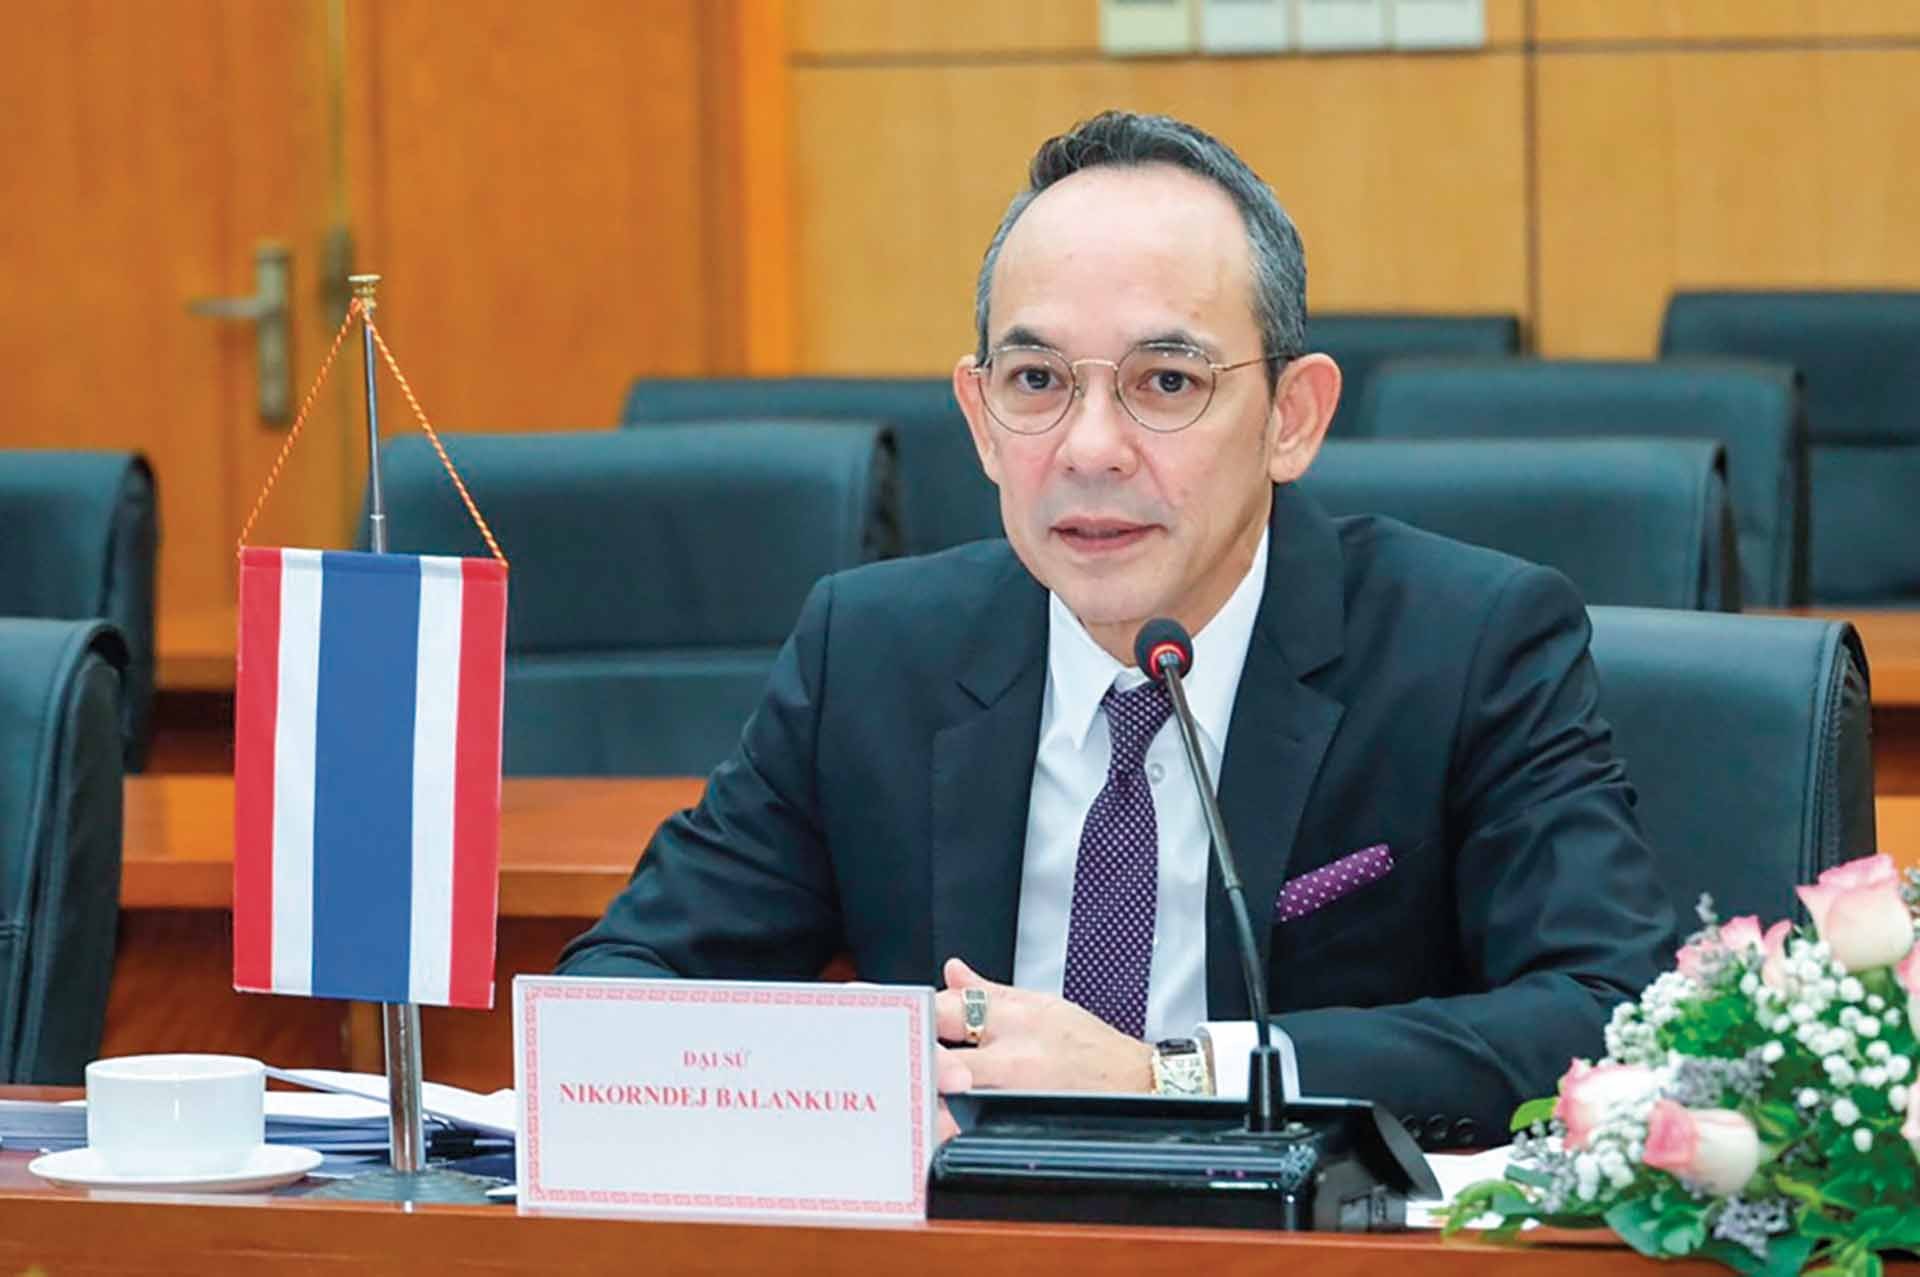 Thailand's Ambassador: Tet is reflective of Viet Nam’s rich cultural heritage